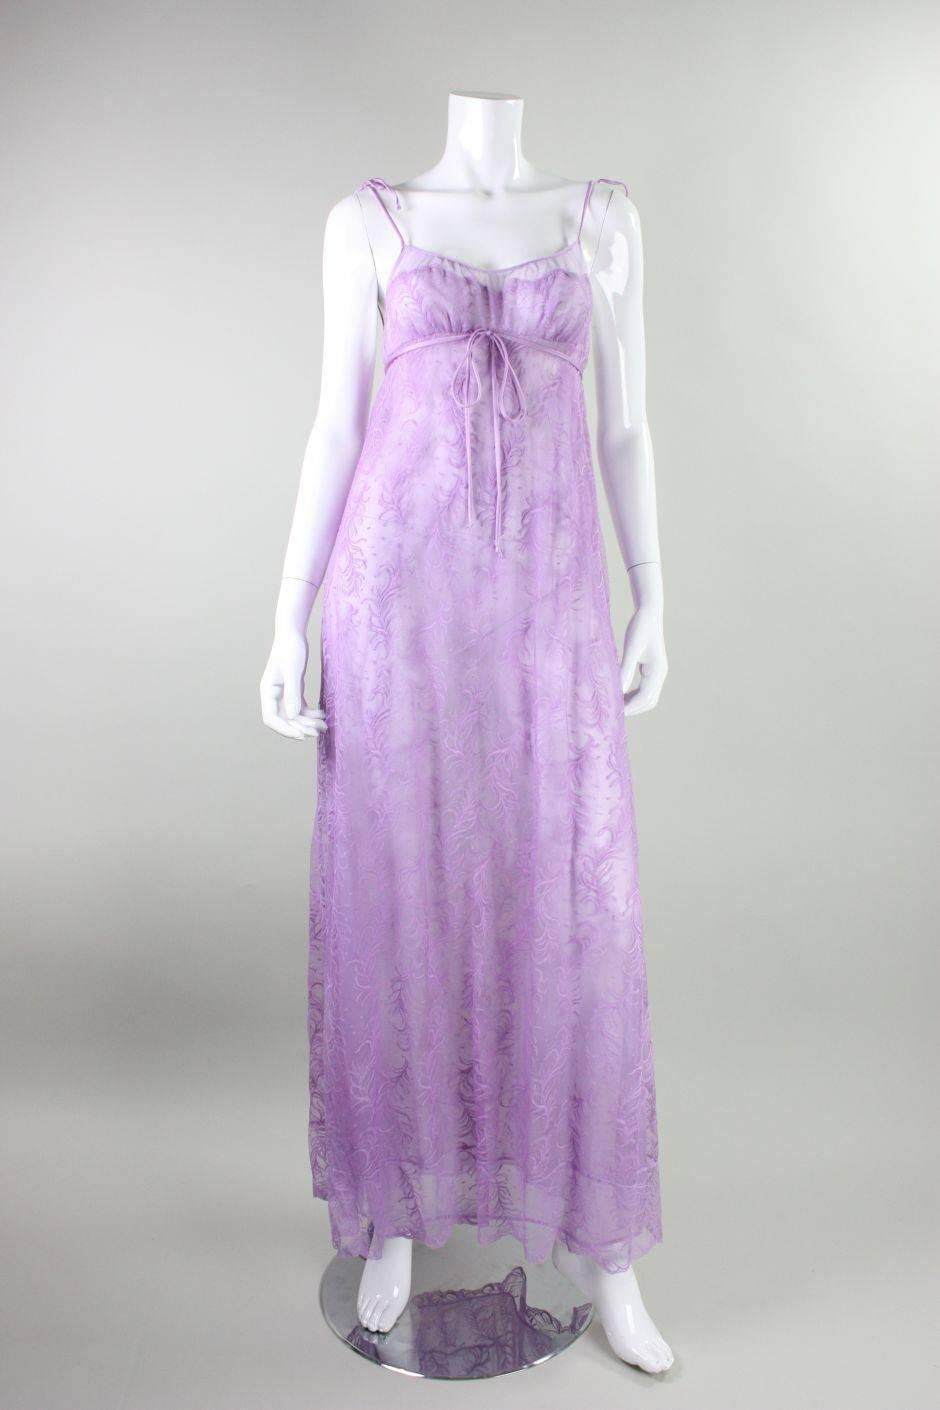 Women's 1980's Bob Mackie for Glydons Lilac Lace Peignoir Set For Sale